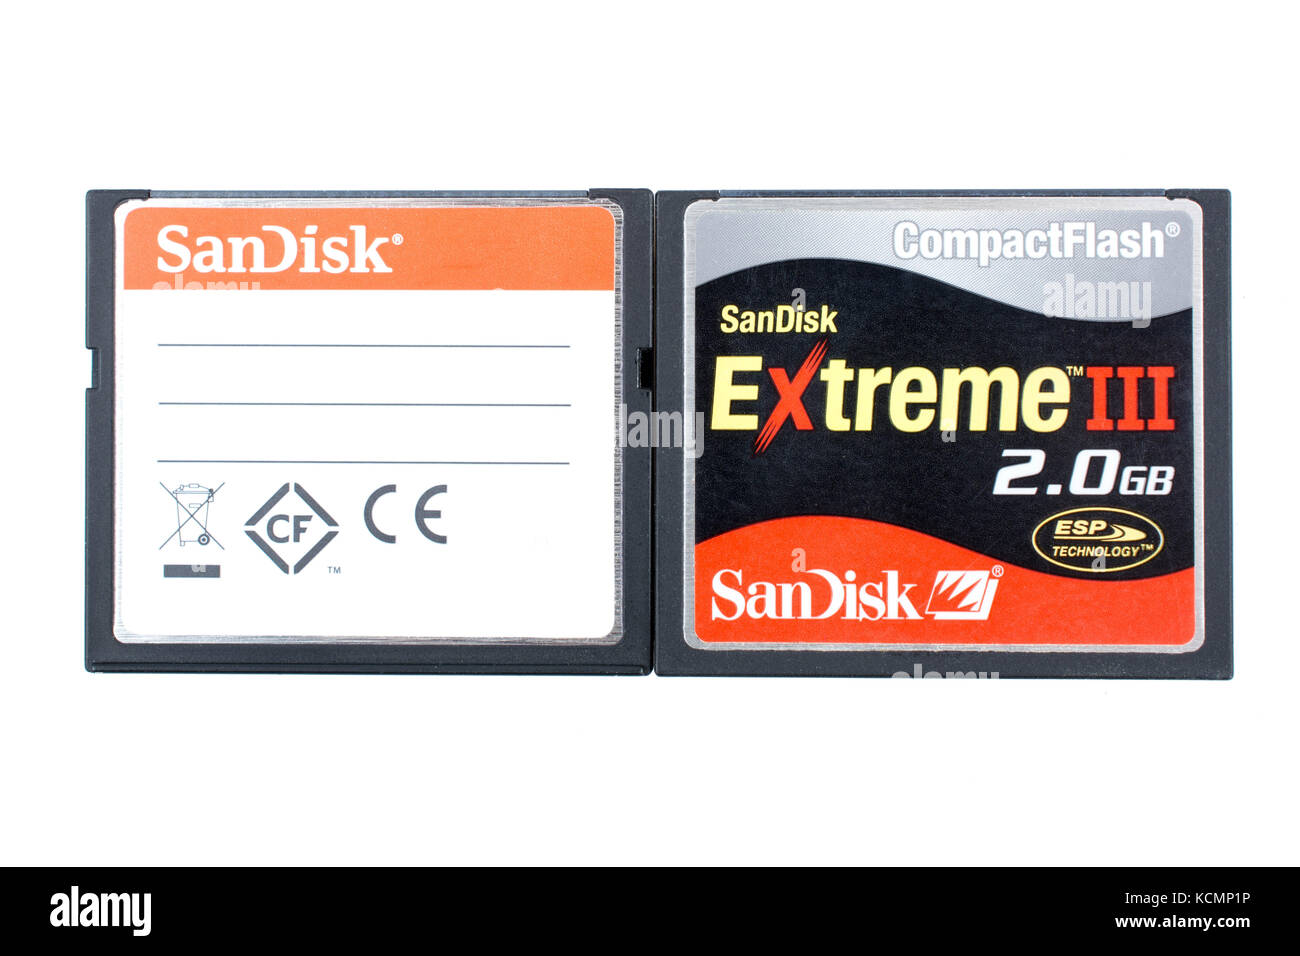 Sandisk Extreme III 2GB Compact Flash card Stock Photo - Alamy